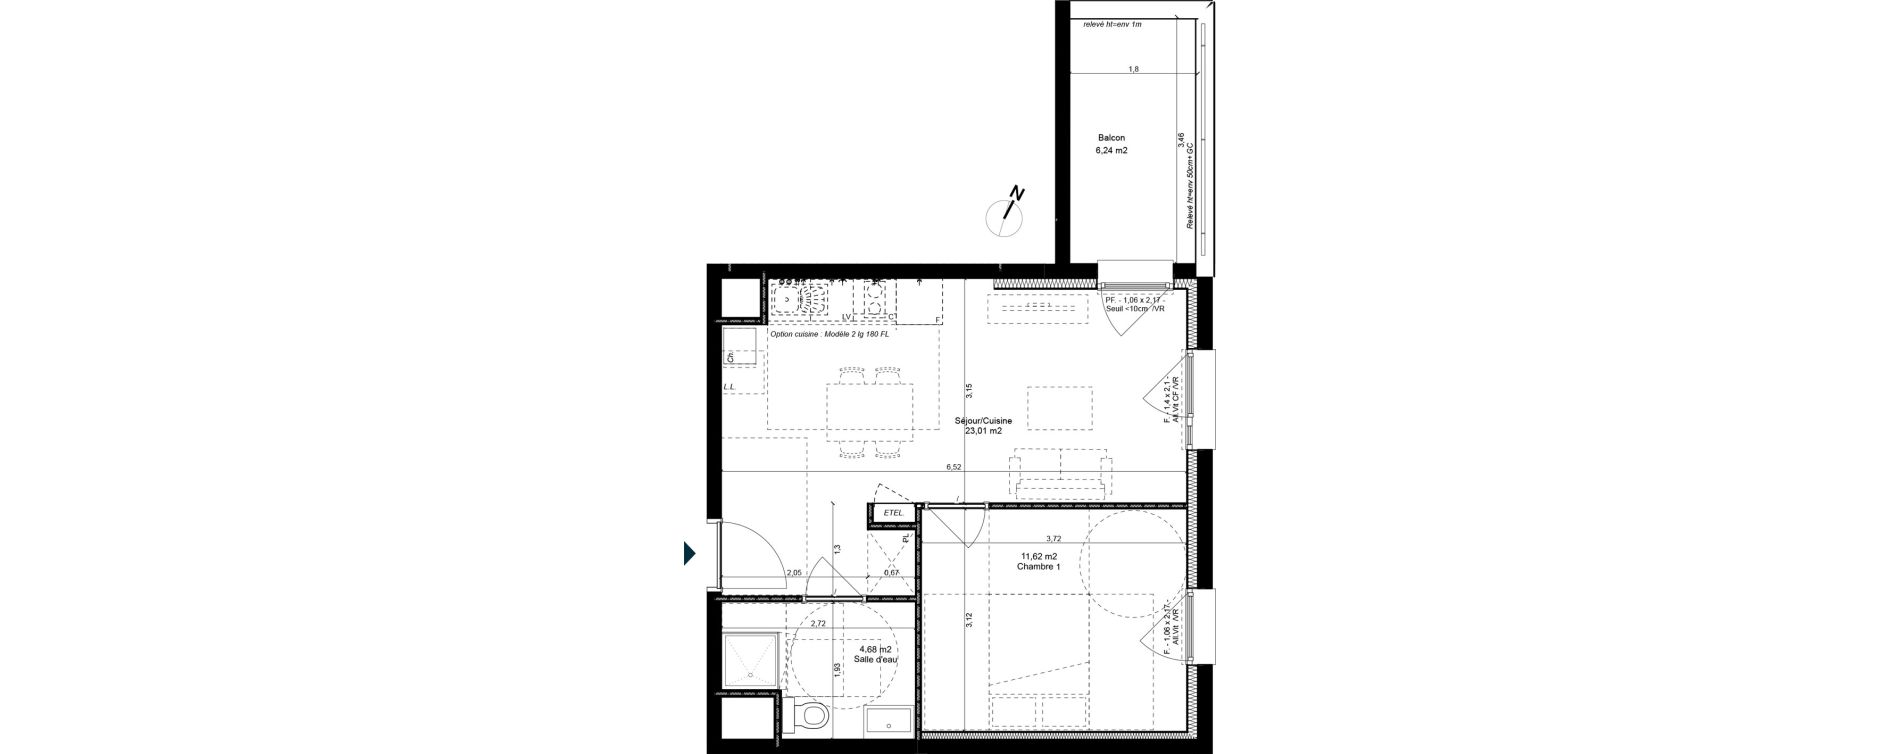 Appartement T2 de 39,32 m2 &agrave; Metz Patrotte - metz nord